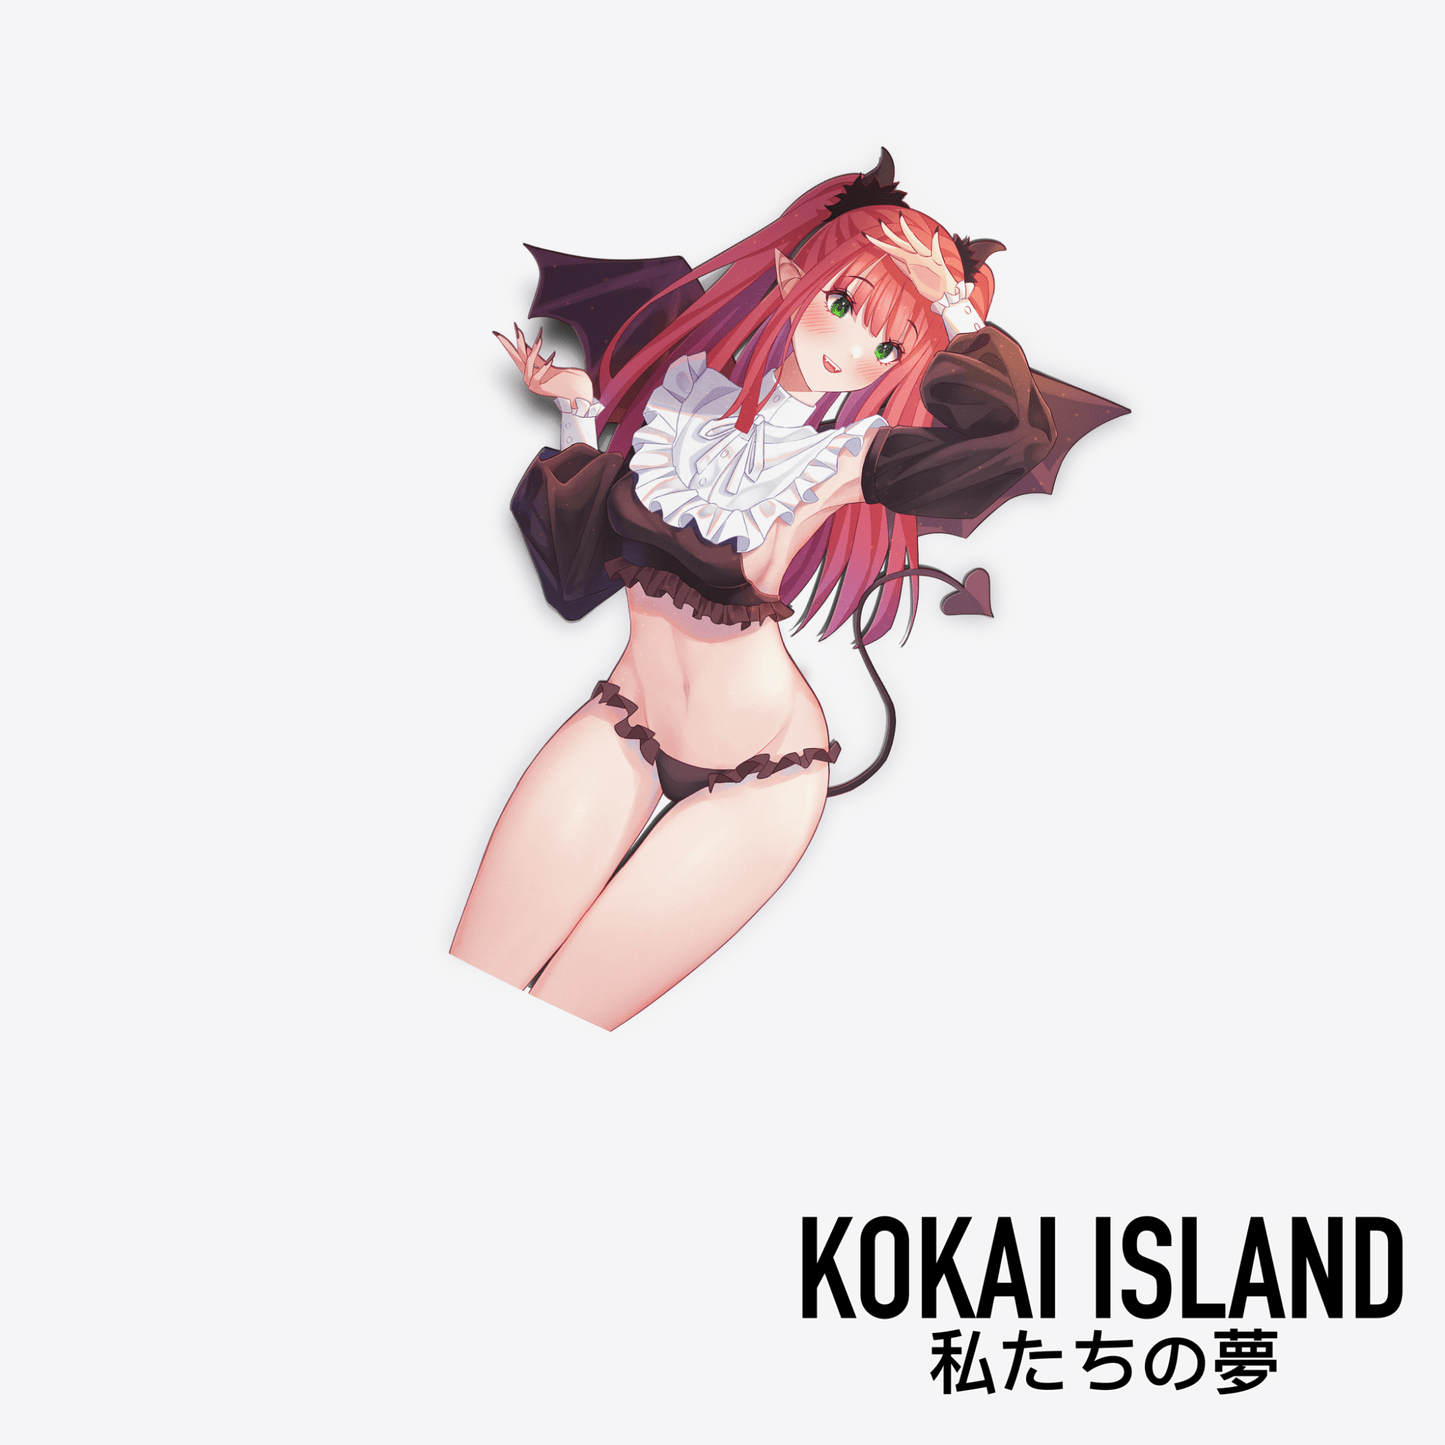 Succubus Cosplayer DecalDecalKokai Island